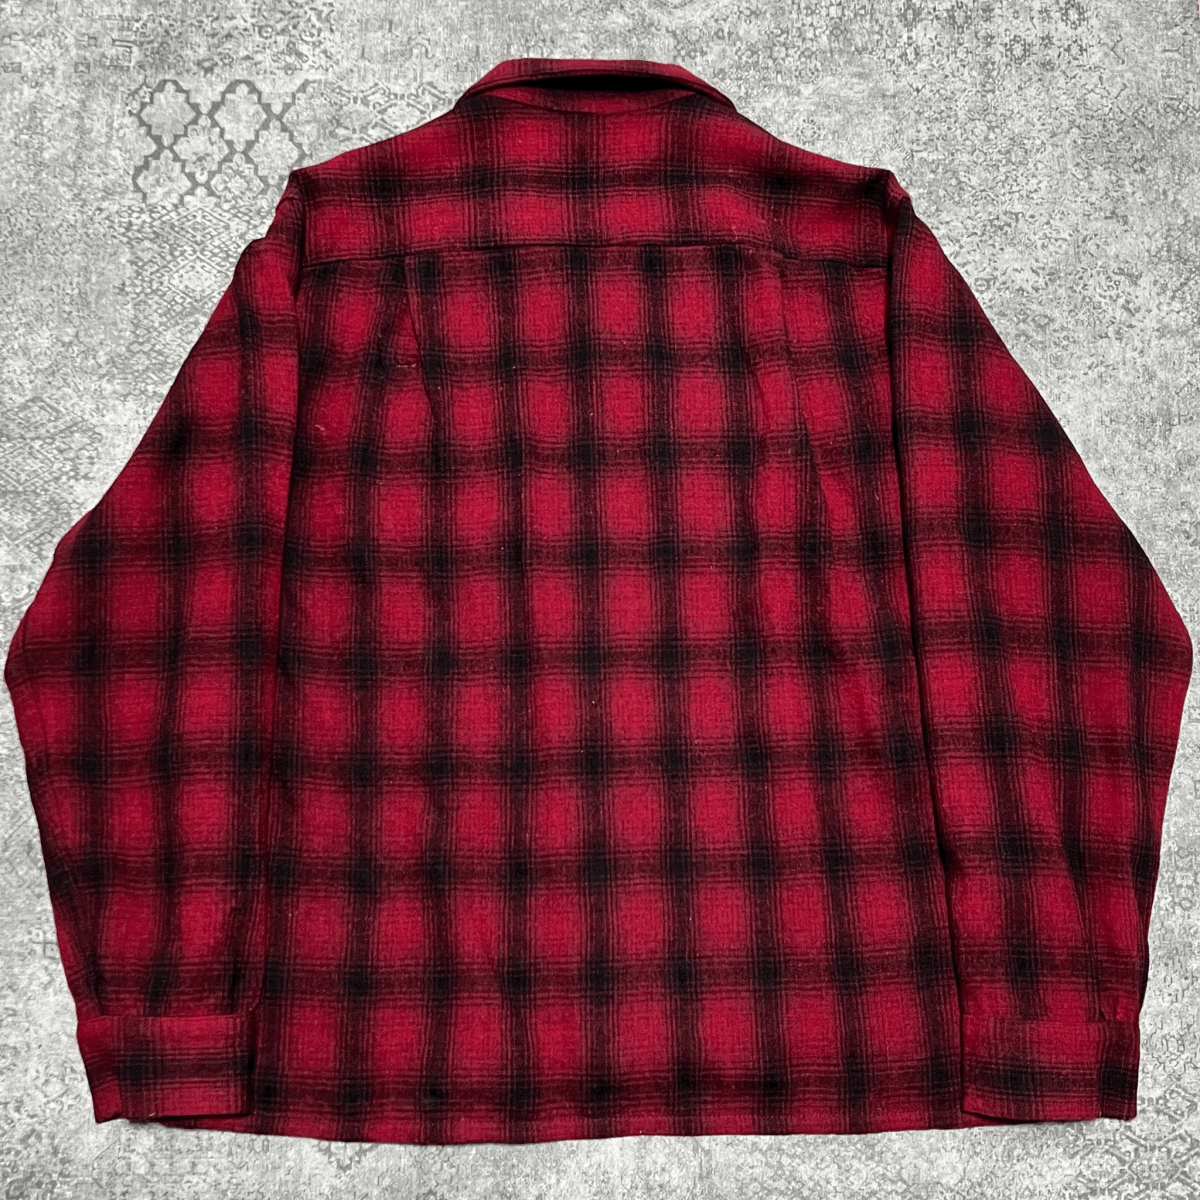 Vintage 50s Ombre Checkerd Wool Shirt オンブレ チェック ウール シャツ レッド ブラック 50年代 ヴィンテージ ビンテージ_画像2